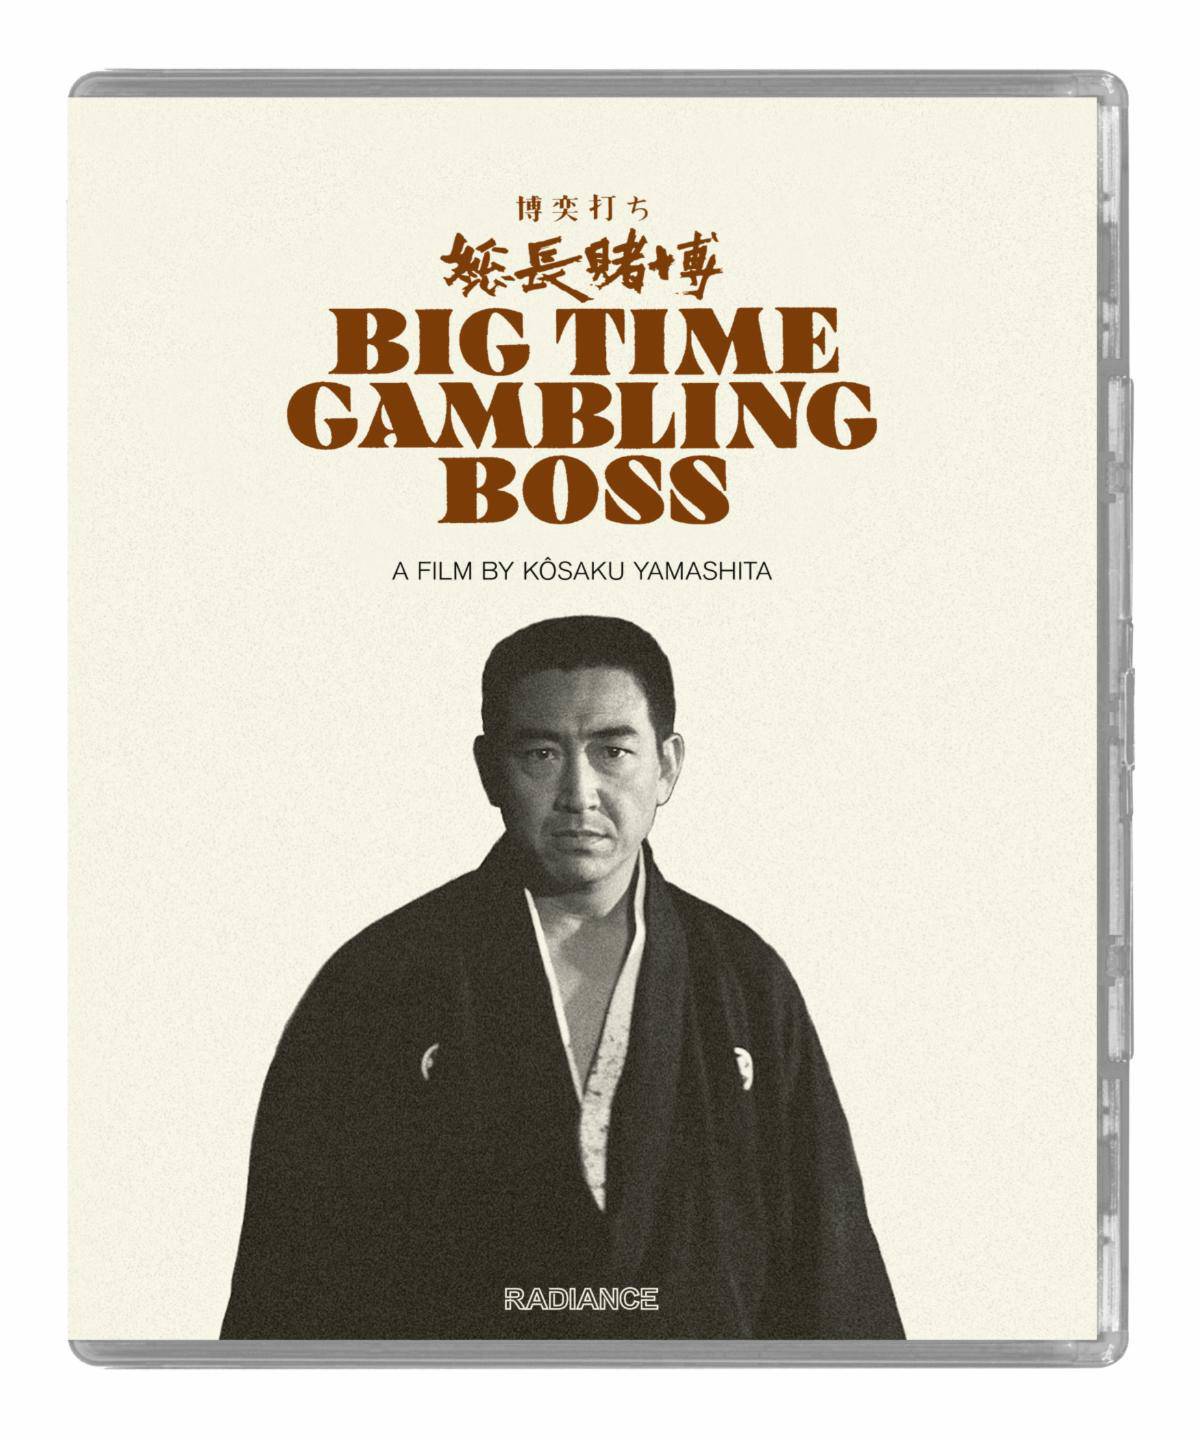 Big Time Gambling Boss makes its Blu-ray debut beginning the Radiance era on Jan 3rd! 18